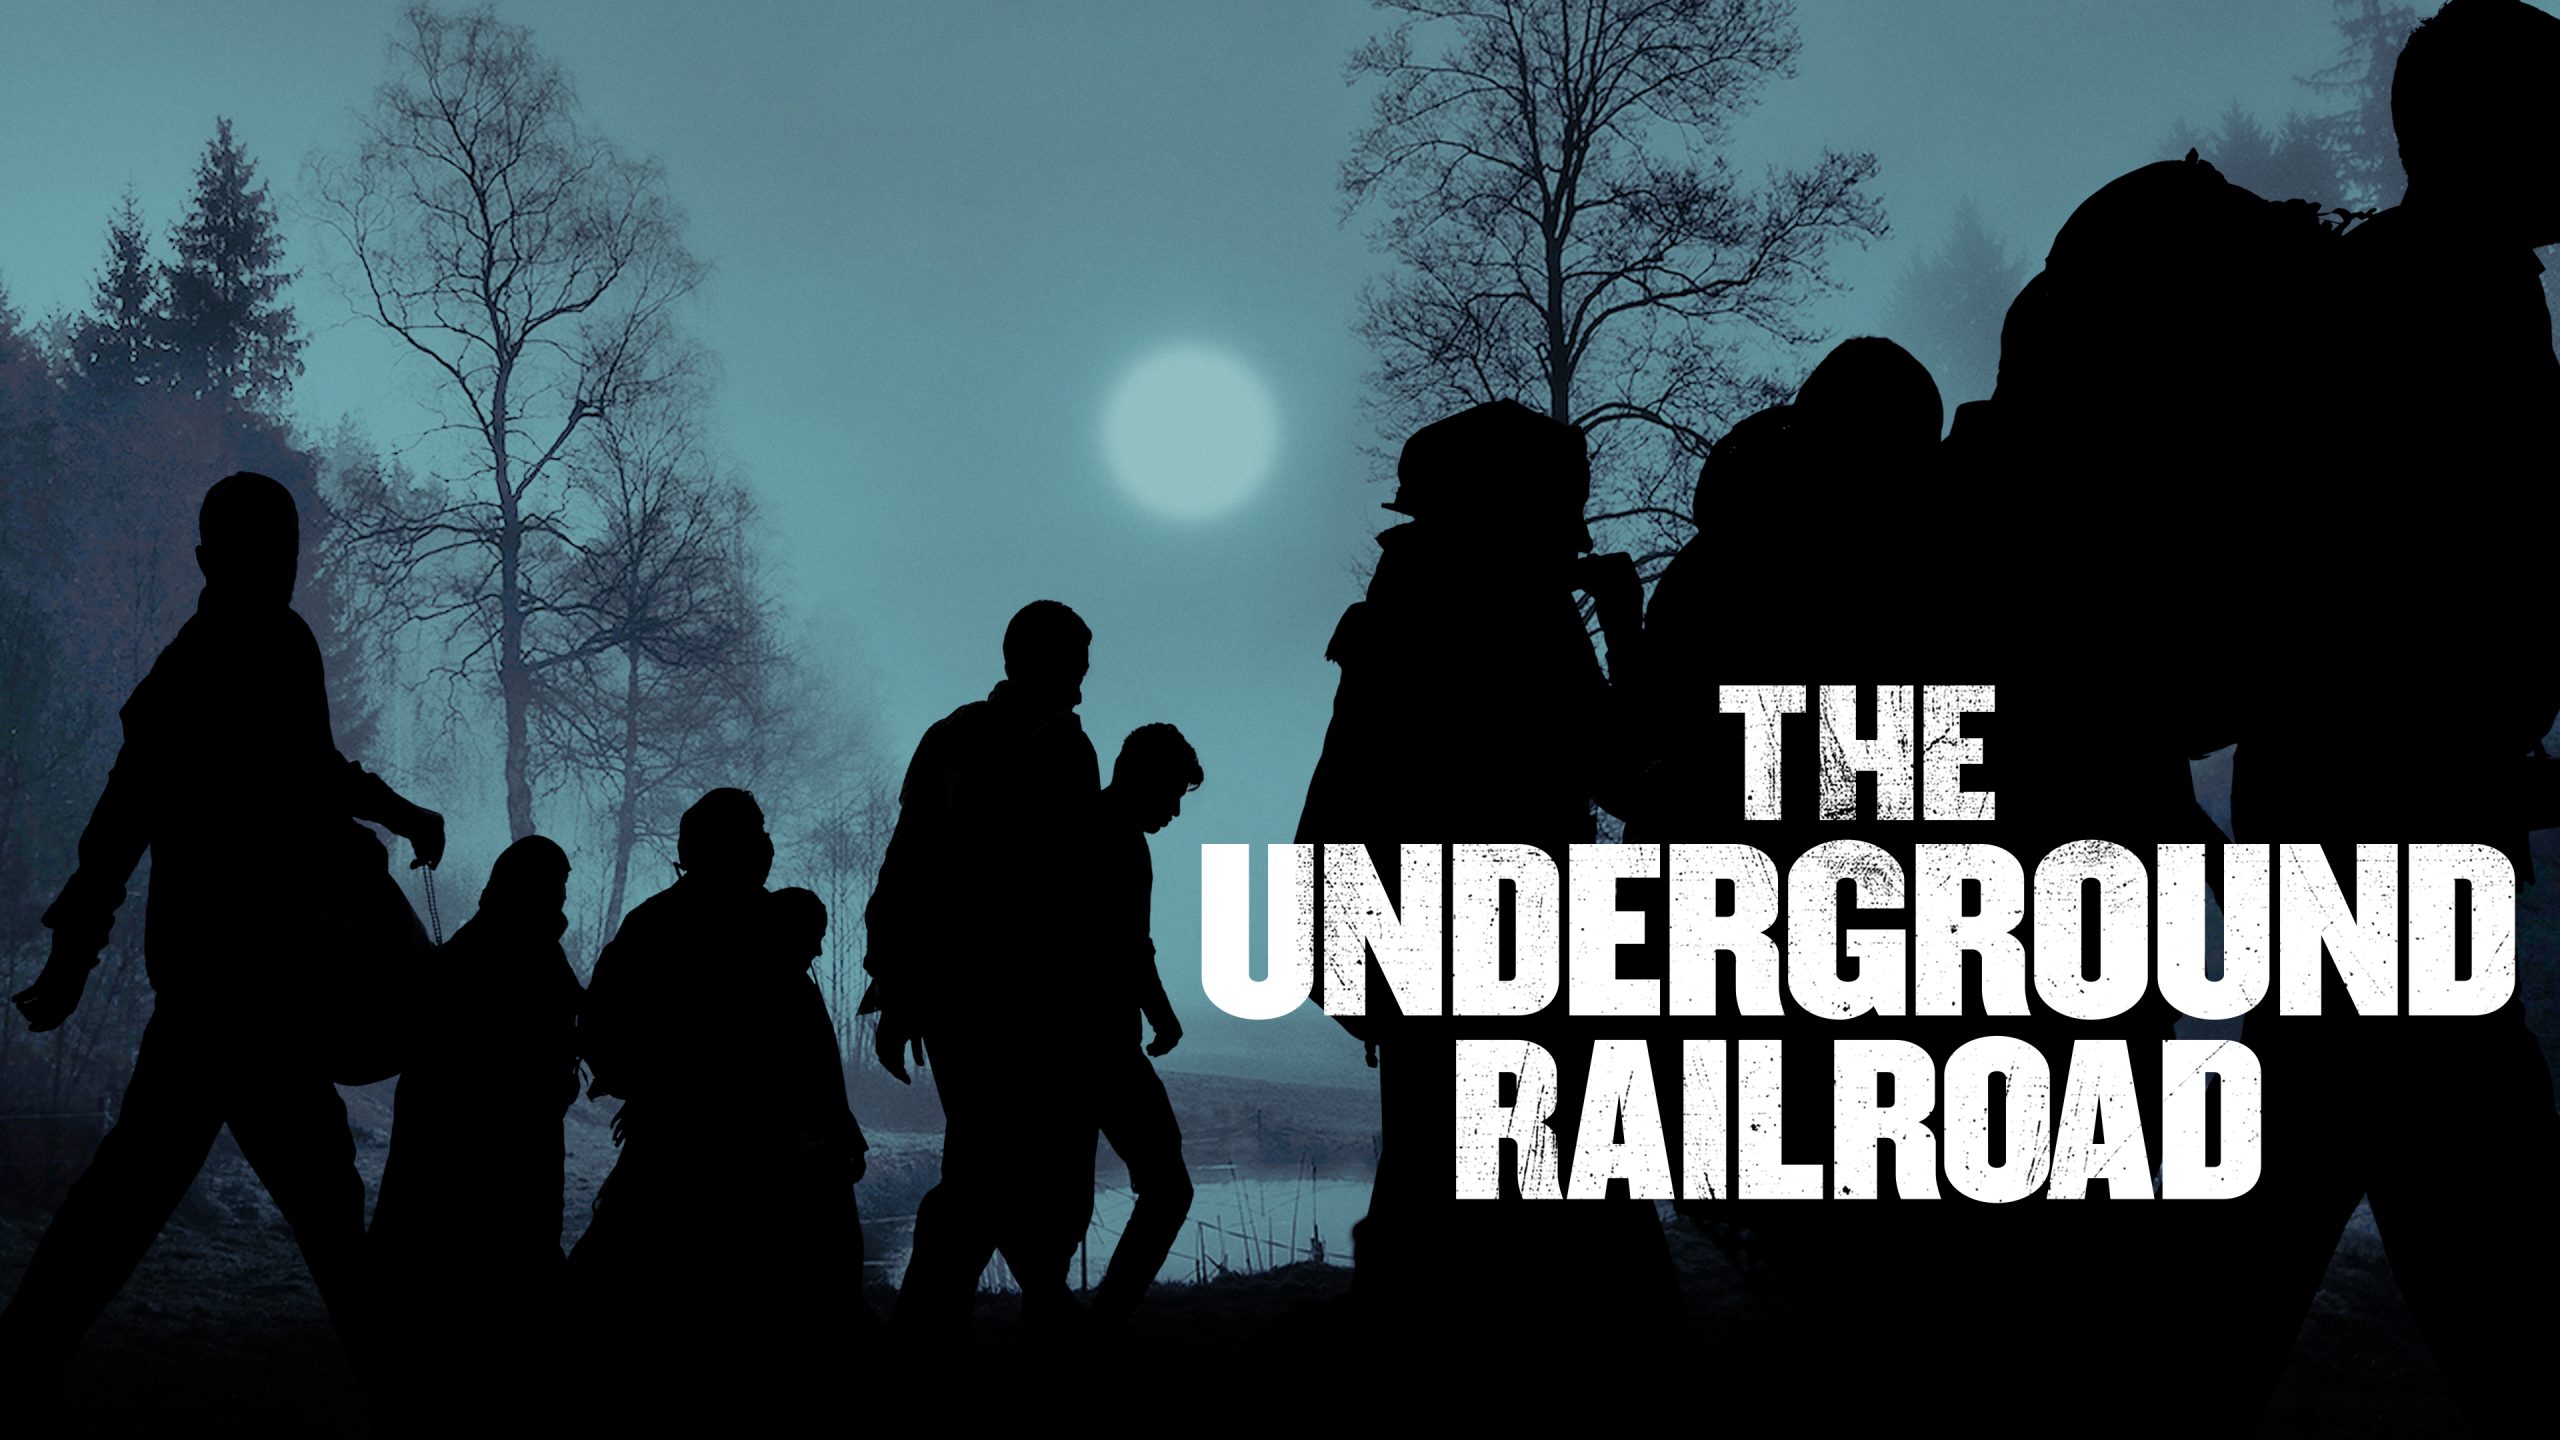 Watch 'The Underground Railroad' on HISTORY Vault!